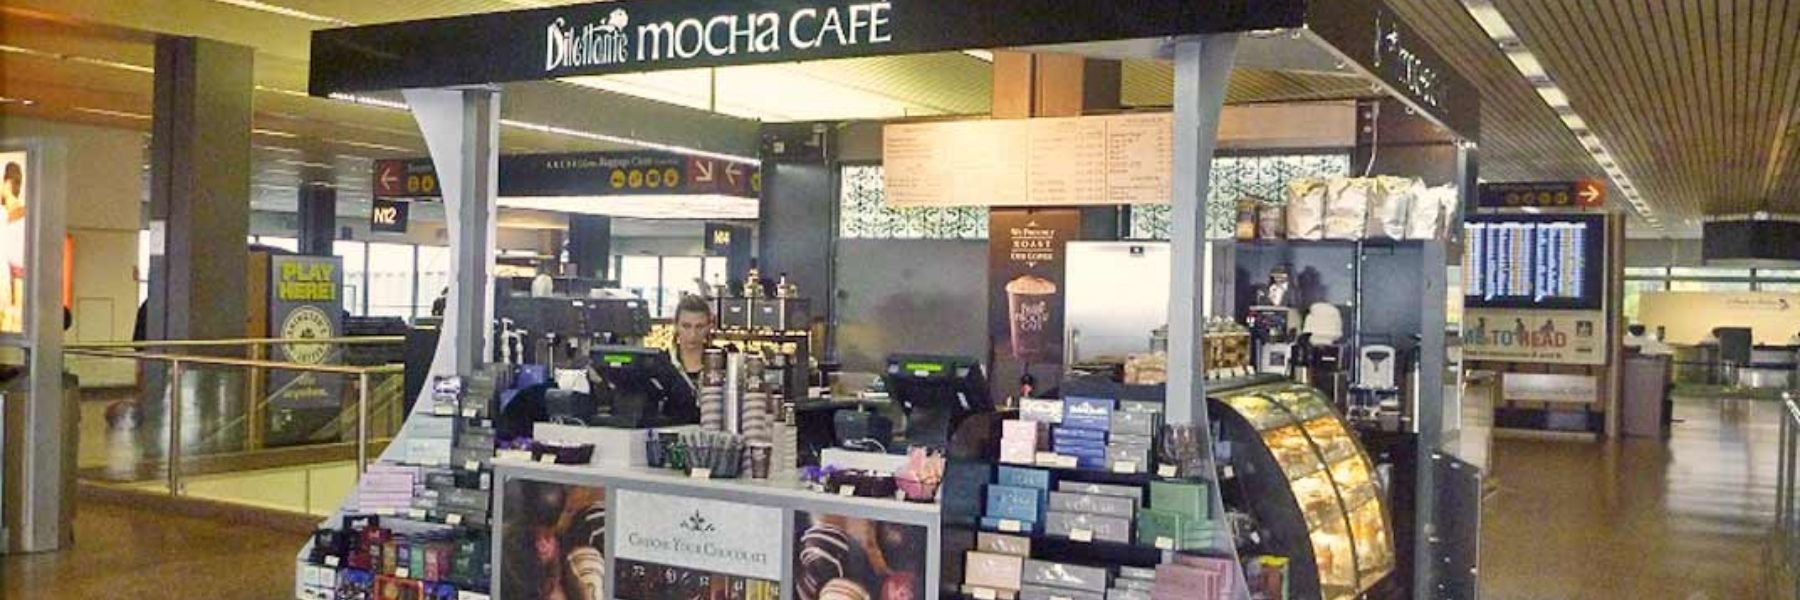 Dilettante Mocha Café Sea-Tac North Location